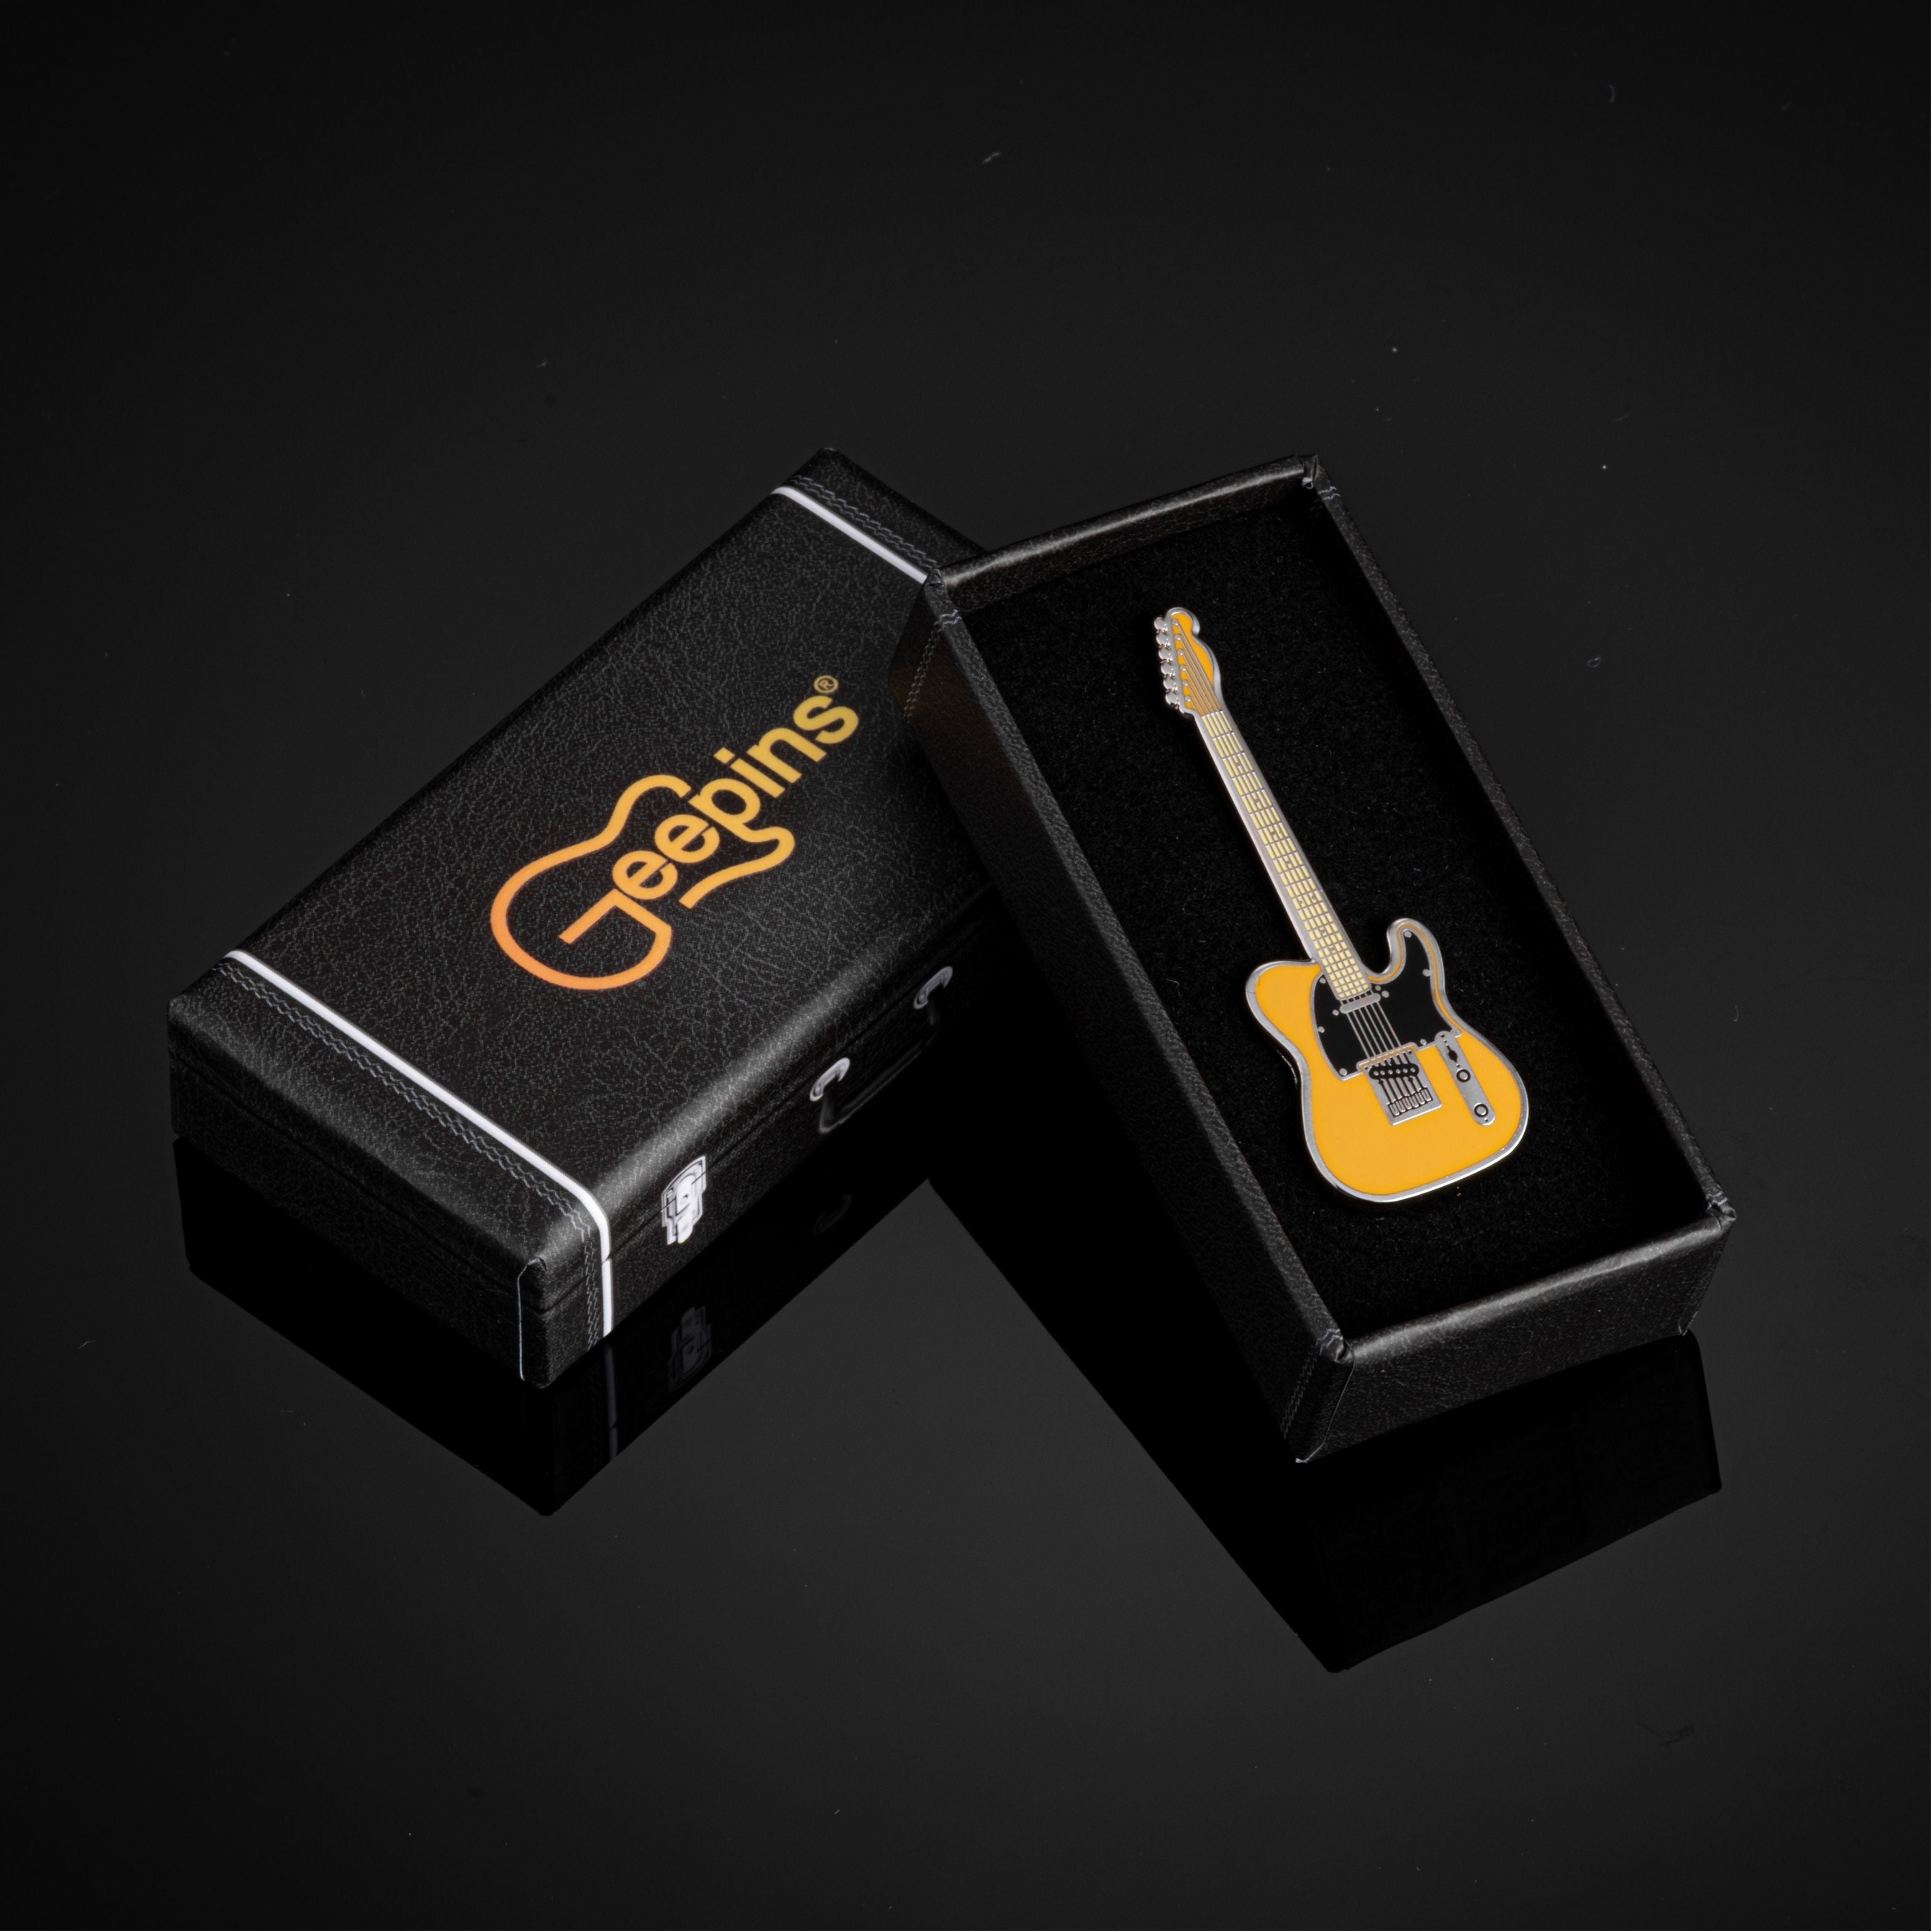 Geepin Tele Guitar Pin